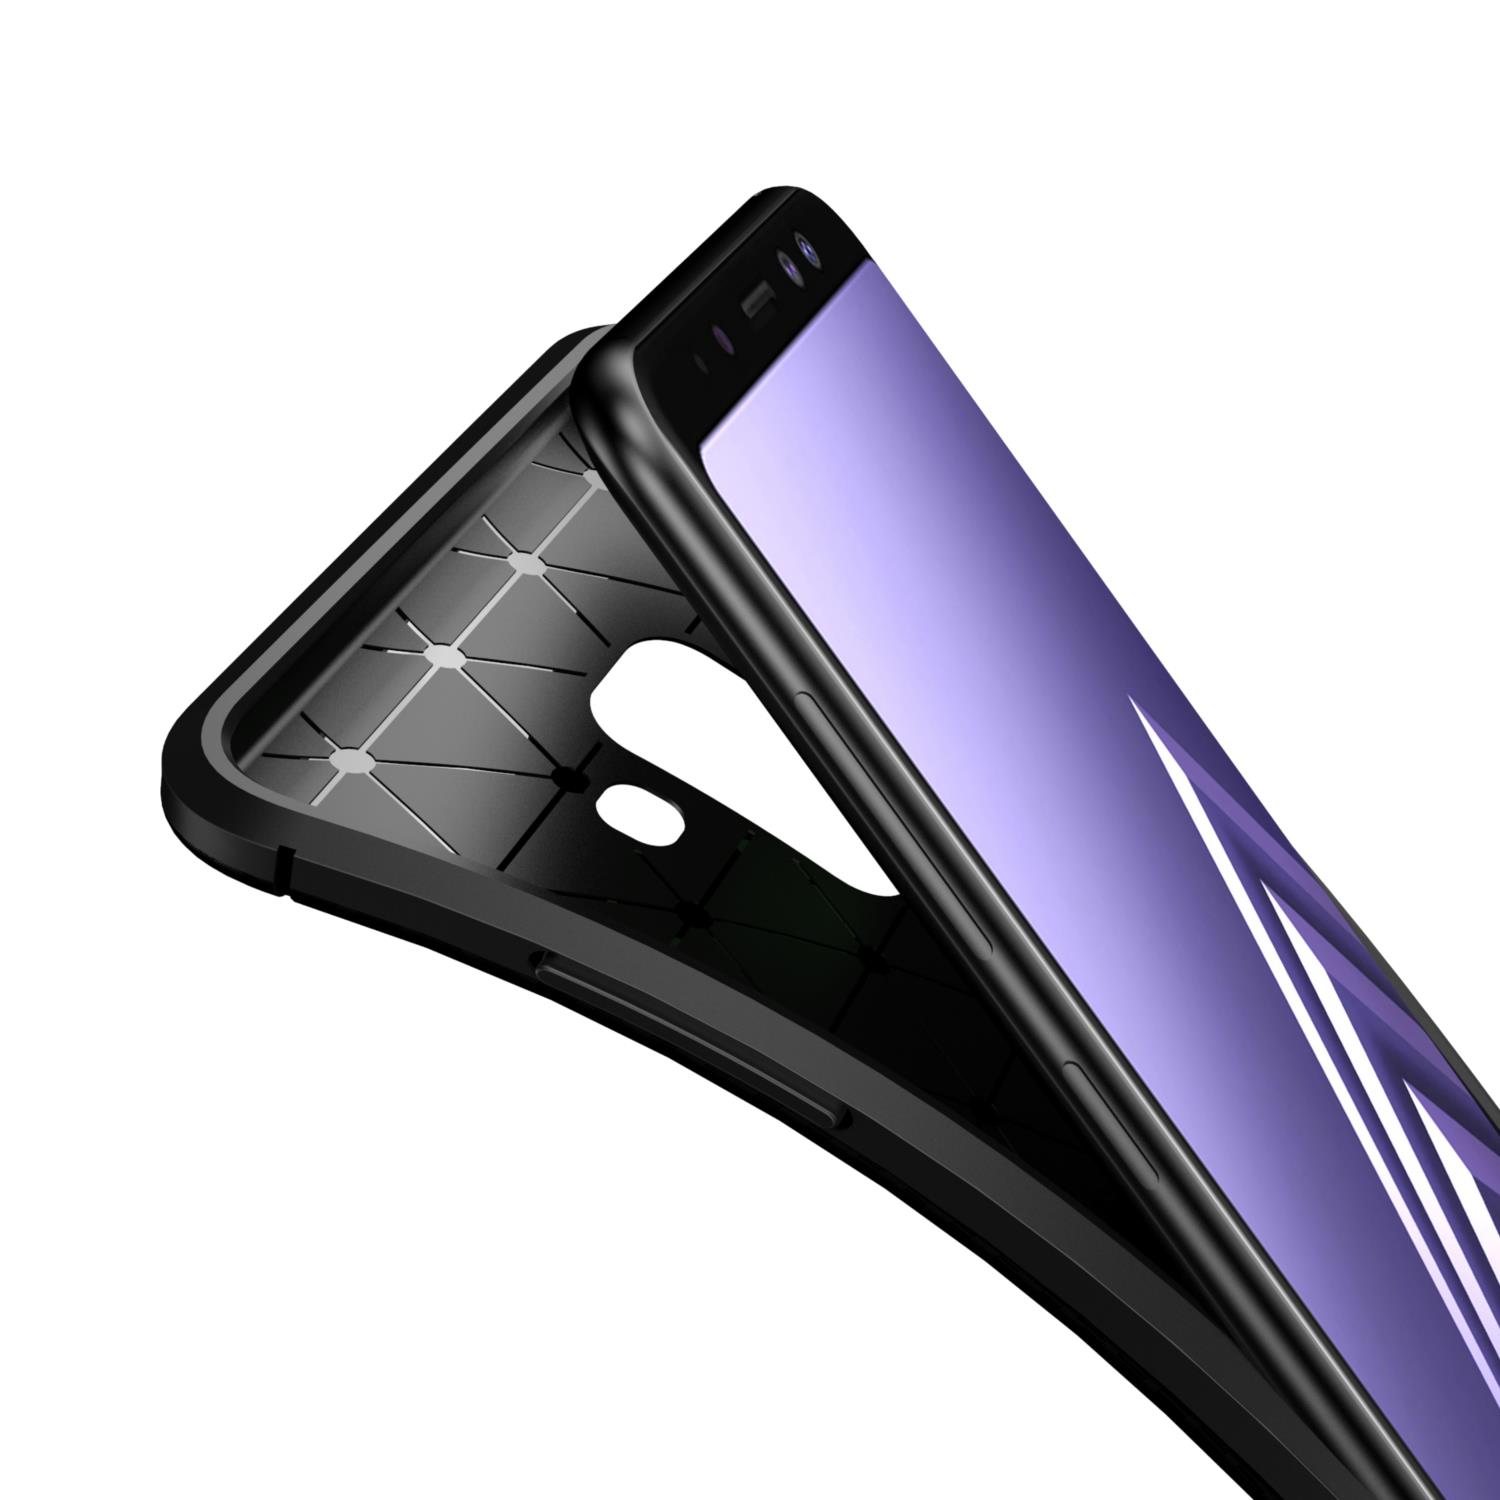 Bakeey-Protective-Case-For-iPhone-A8-Plus-2018-Slim-Carbon-Fiber-Fingerprint-Resistant-Soft-TPU-1361109-7